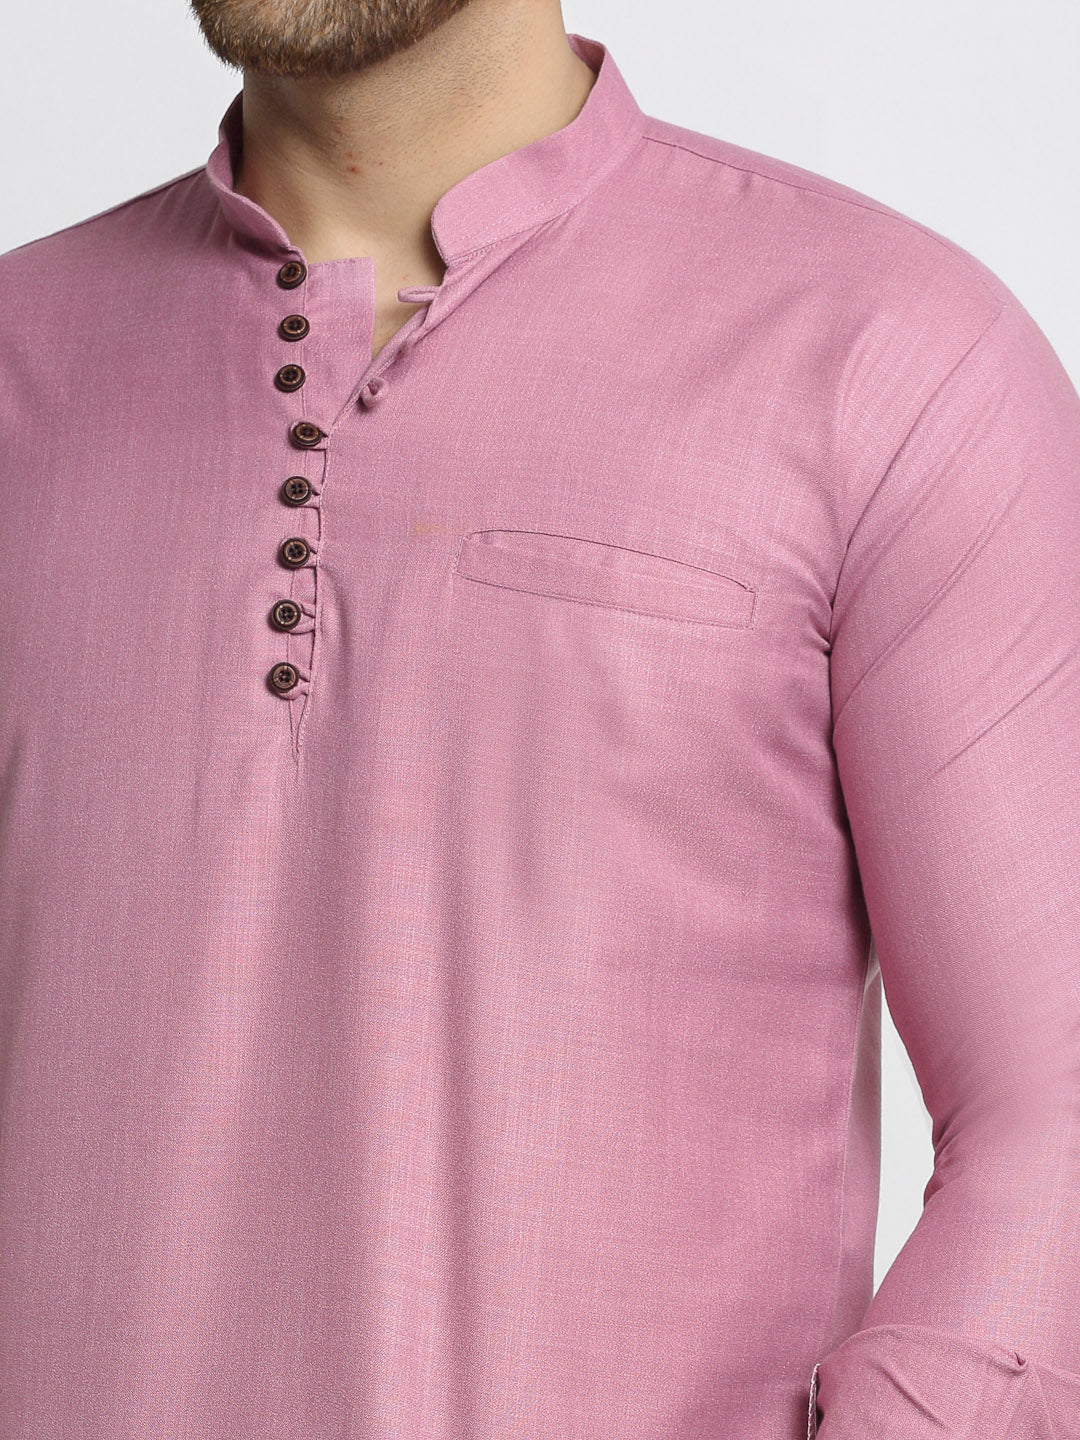 Jompers Men's Magenta Pink Solid Cotton Short Kurta ( KO 639 Magenta )